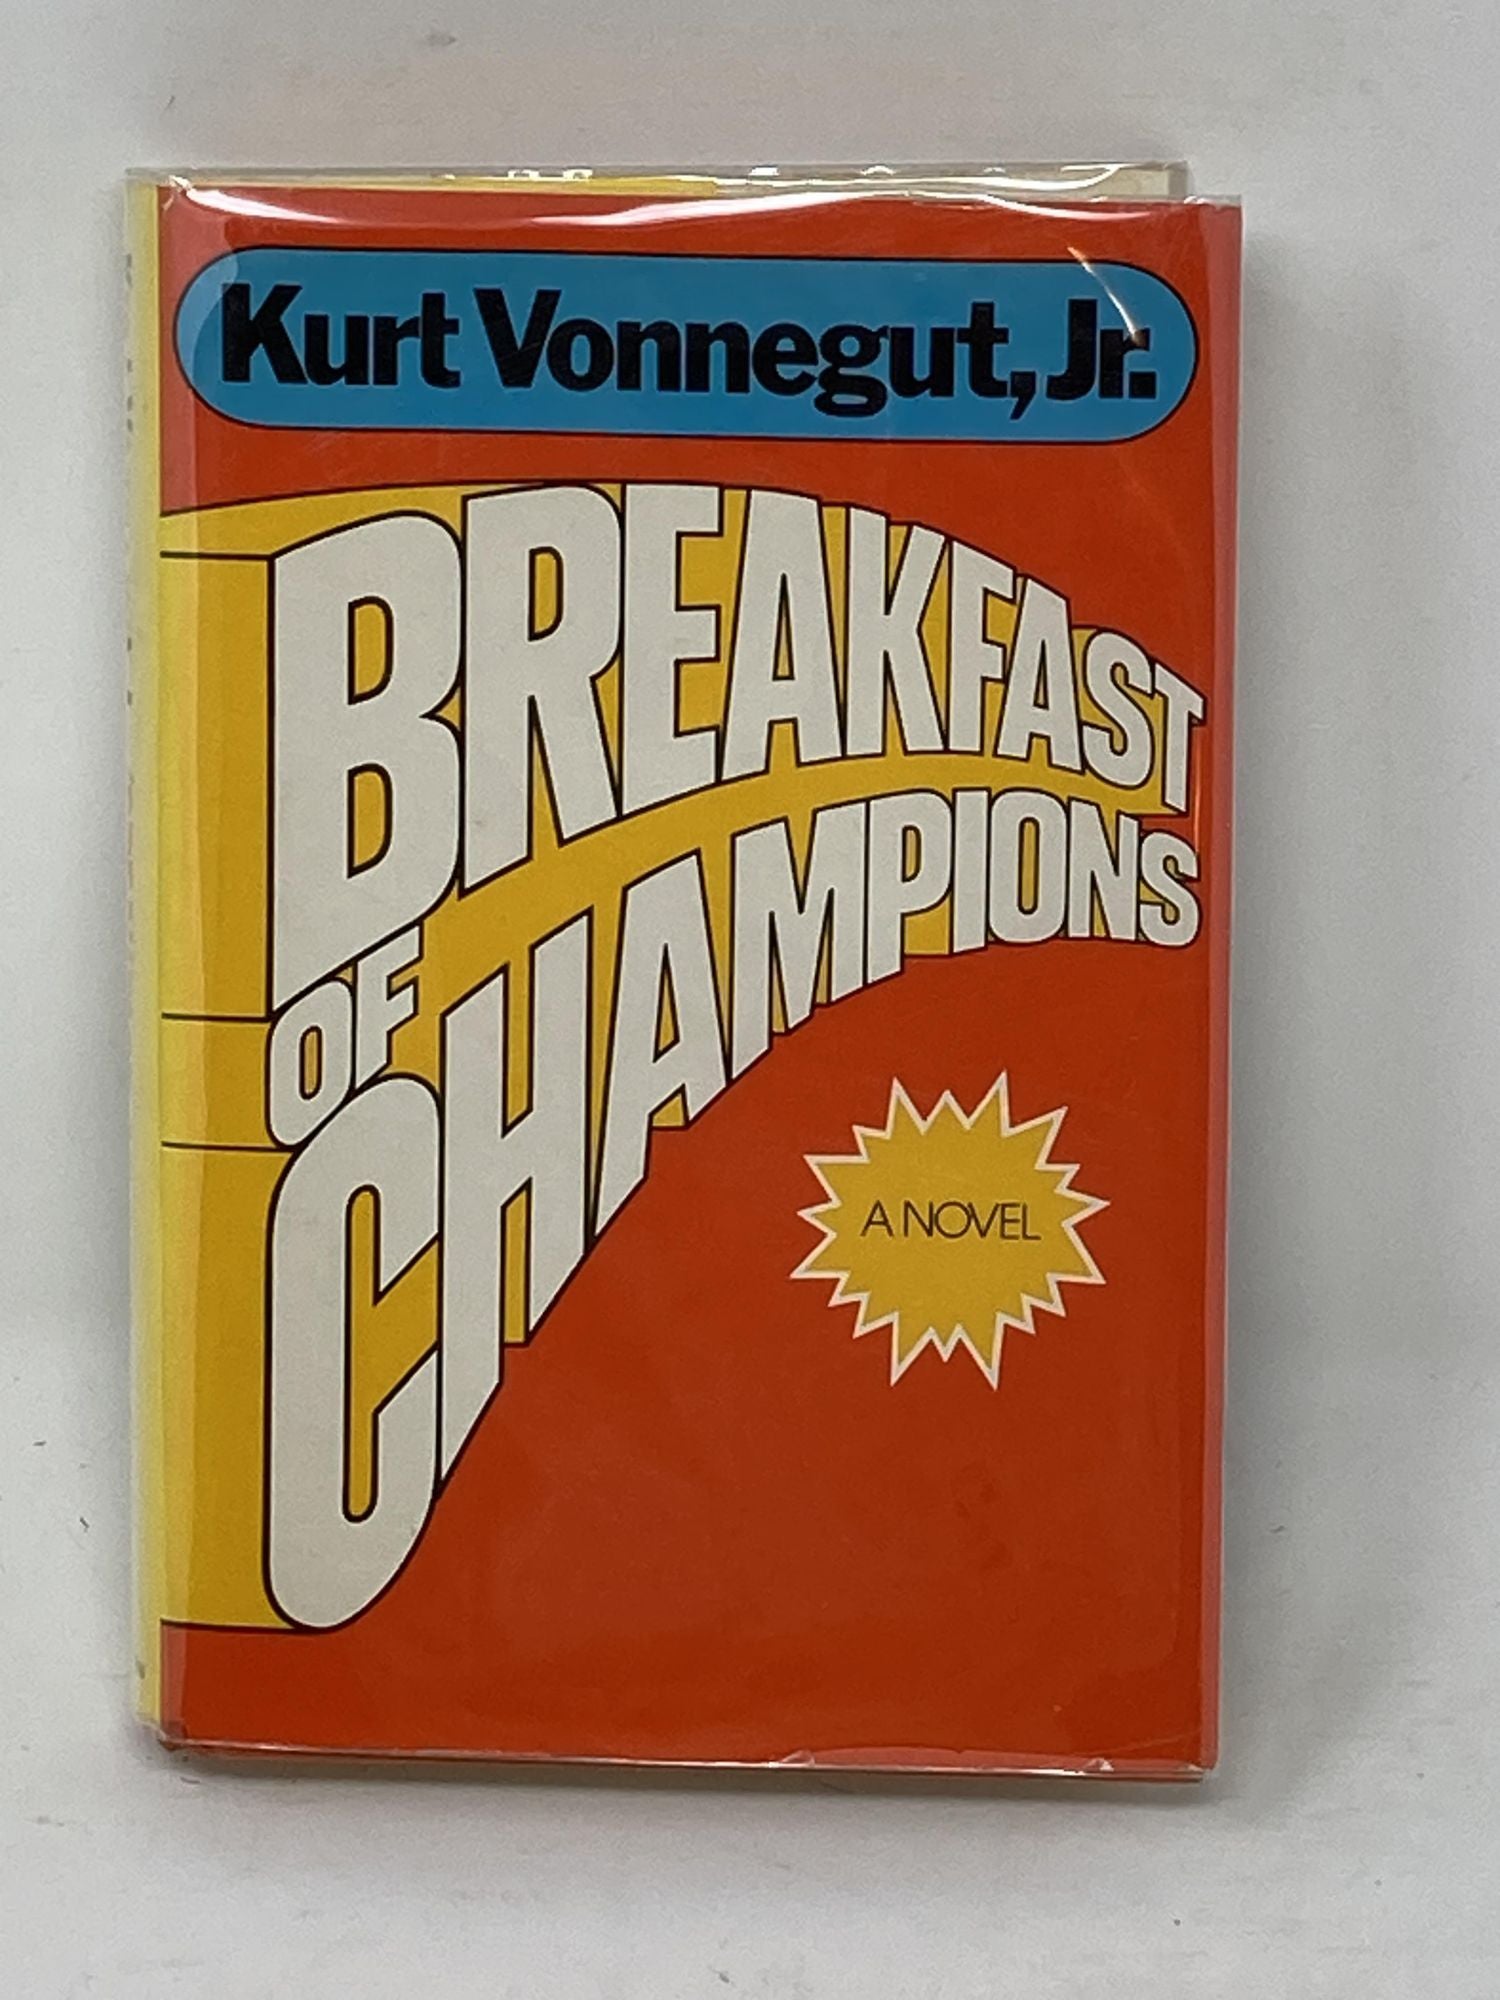 Vonnegut, Kurt (Jr.) - Breakfast of Champions (or Goodbye Blue Monday!)